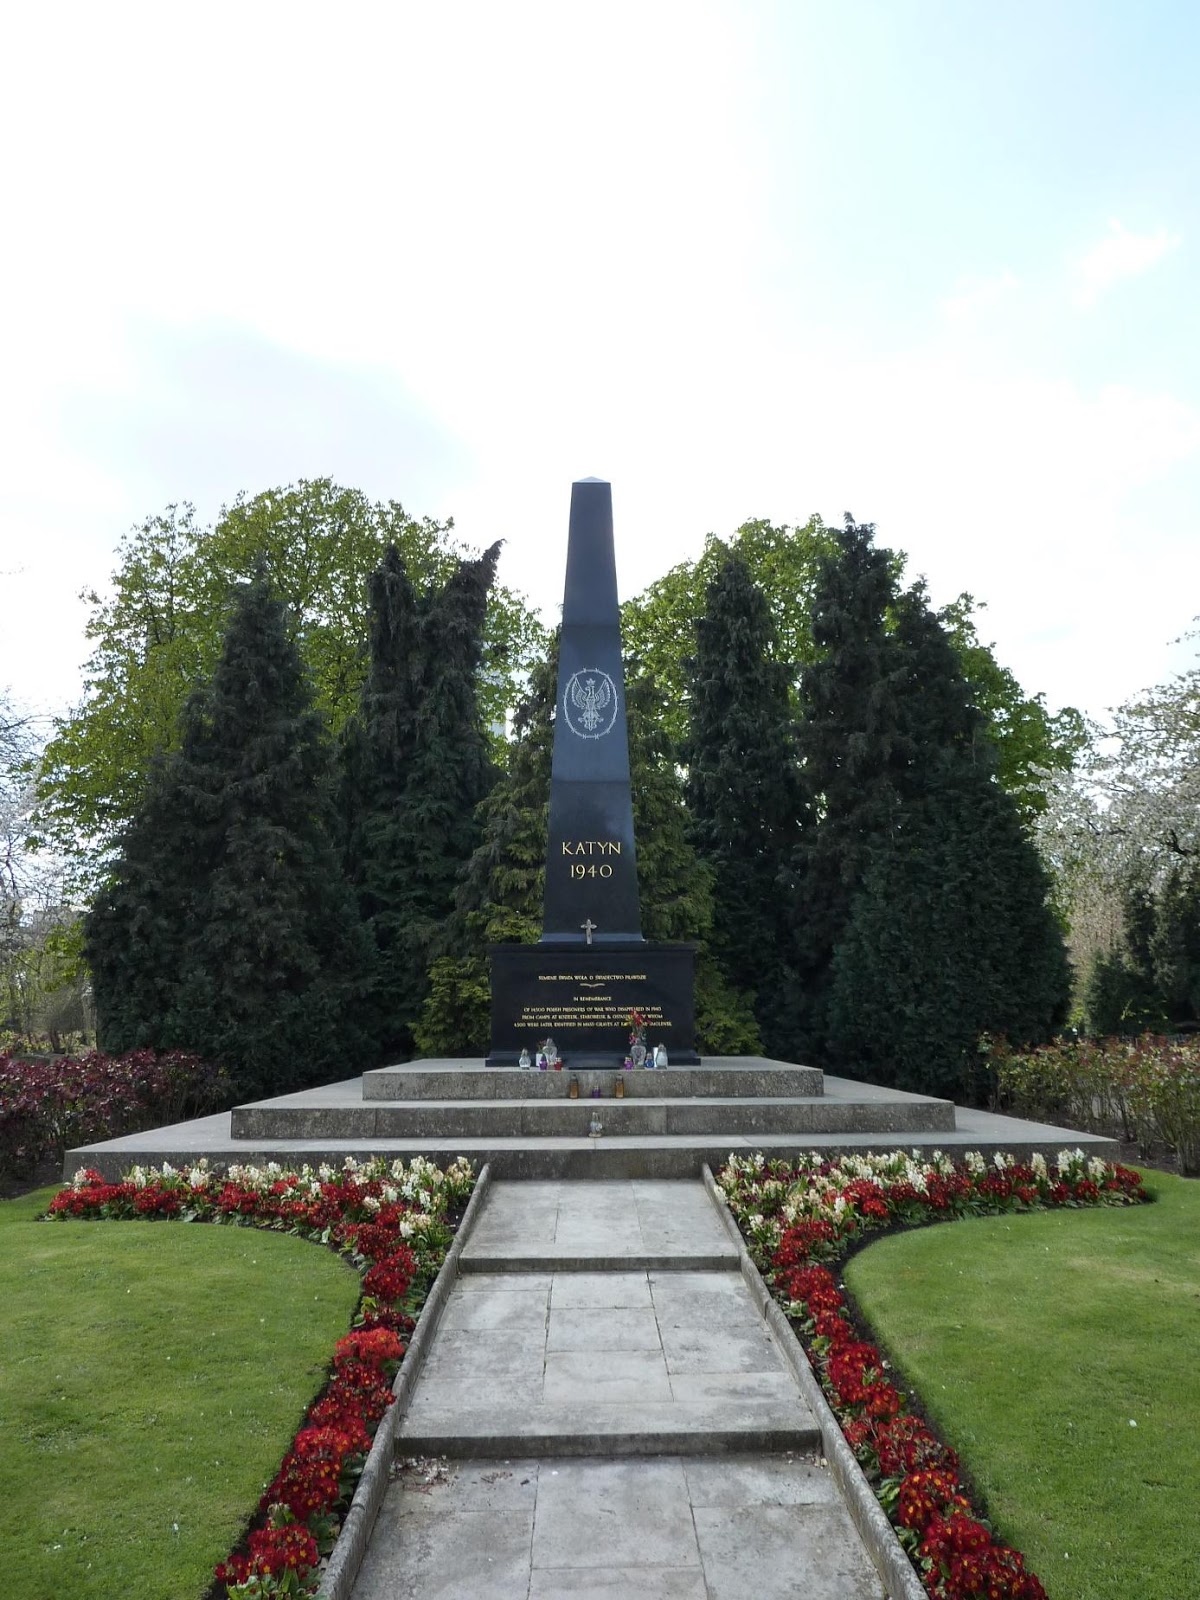 https://upload.wikimedia.org/wikipedia/commons/0/01/Katyn_memorial_in_Gunnersbury_Cemetery_%287282172884%29.jpg